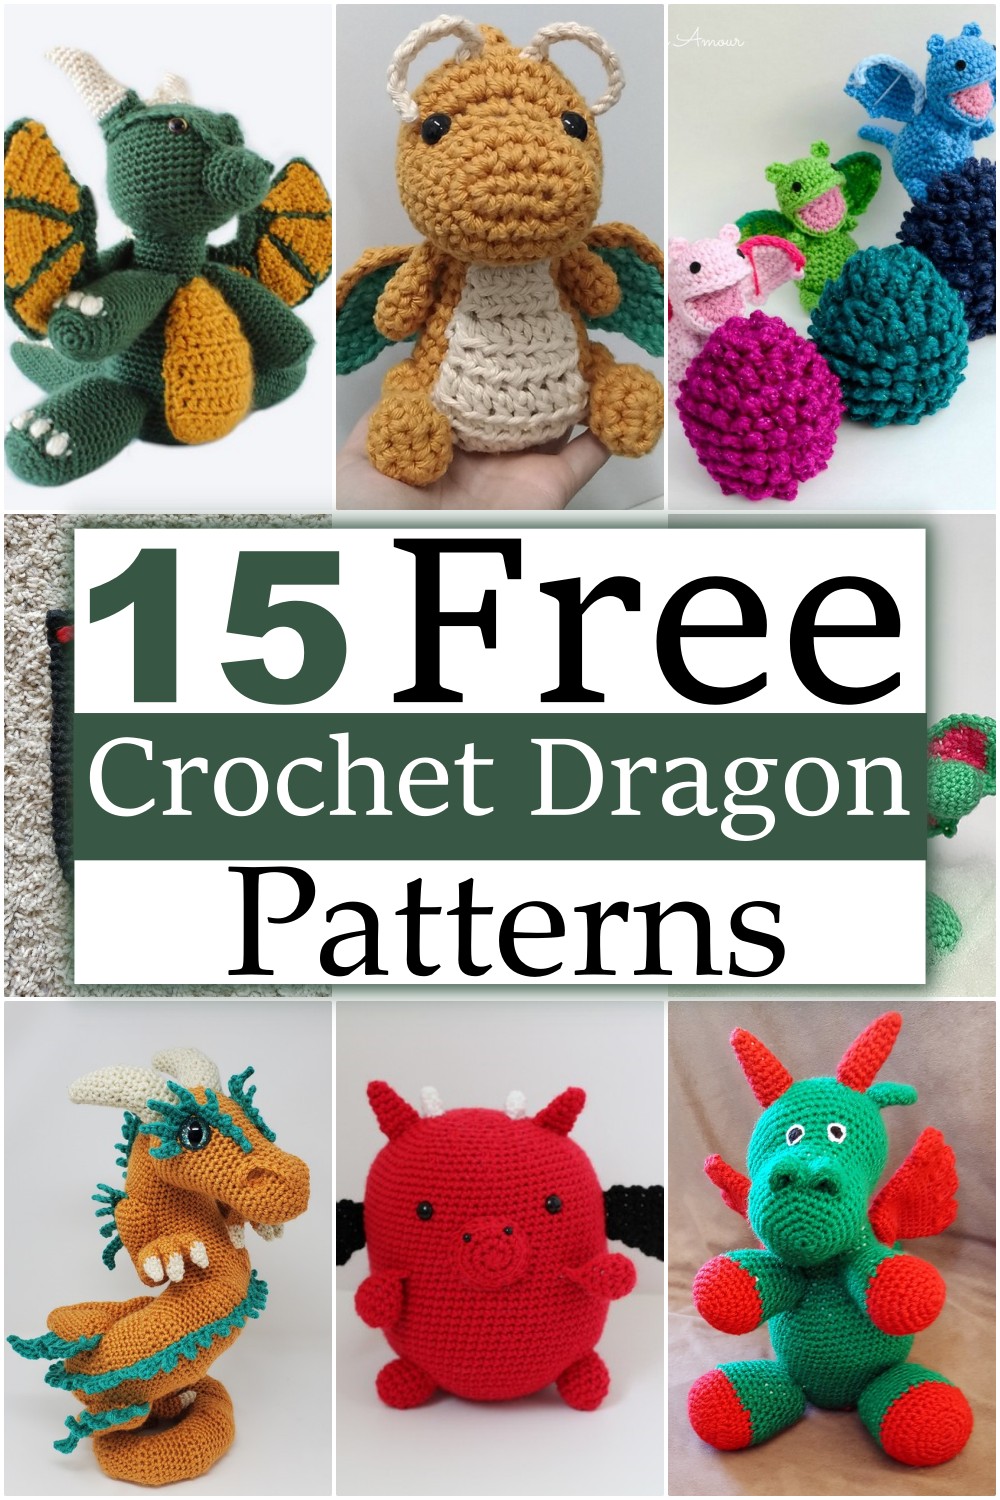 Crochet Dragon Patterns